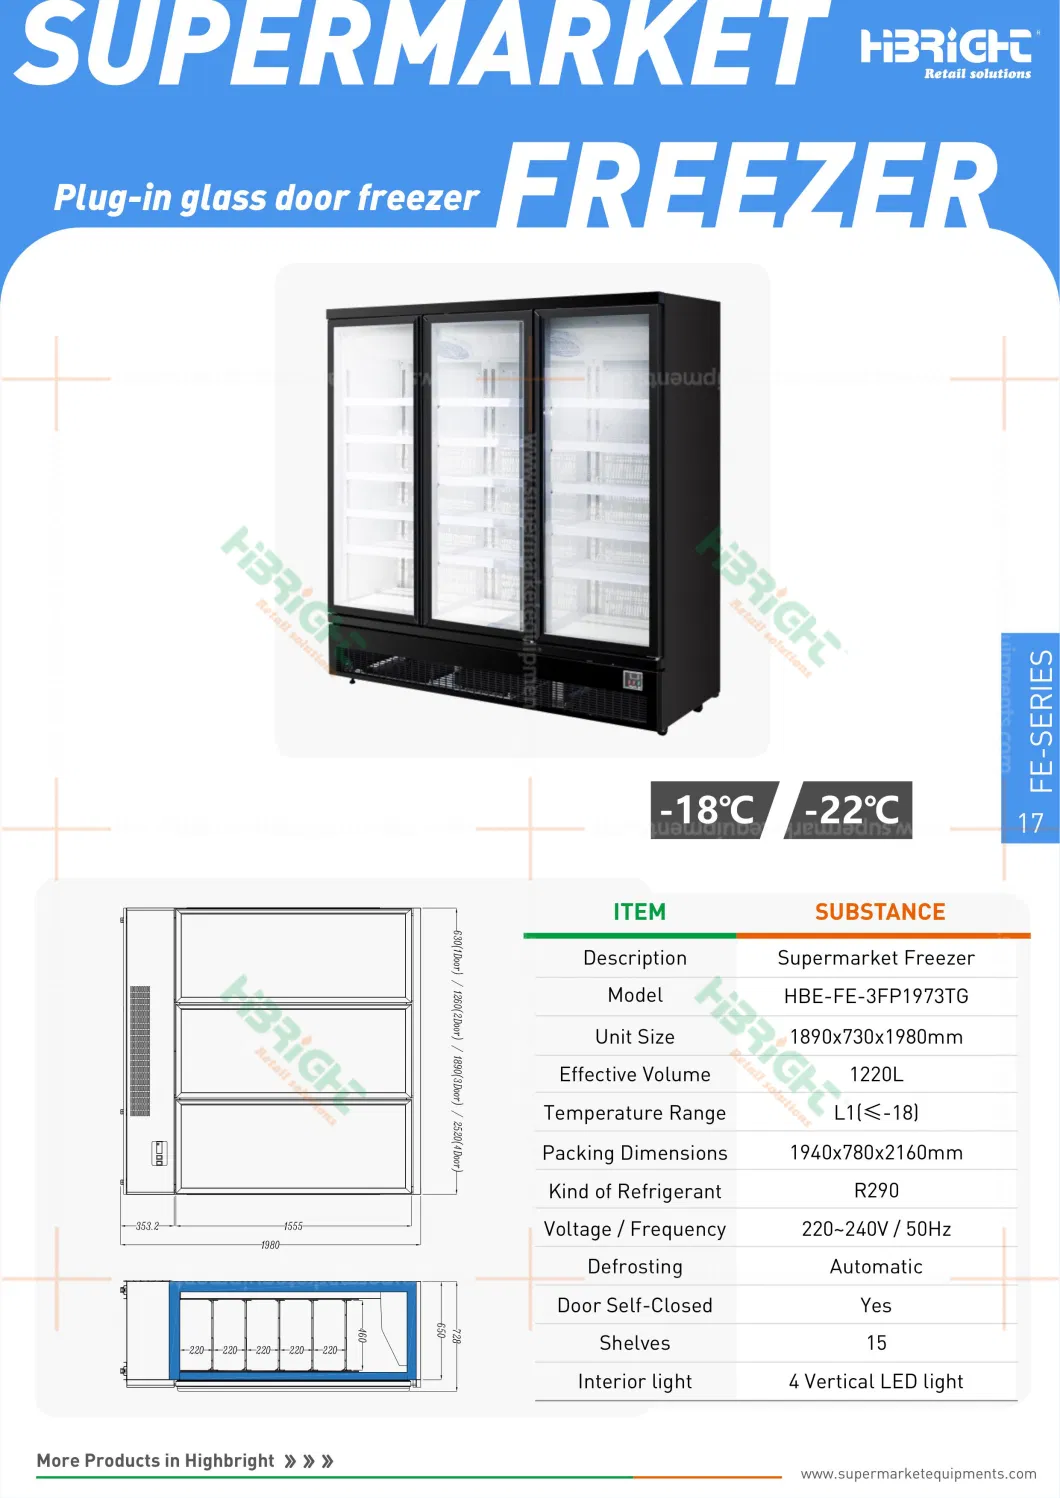 Automatic Defrosting Vertical LED Lights Commercial Supermarket Refrigerator